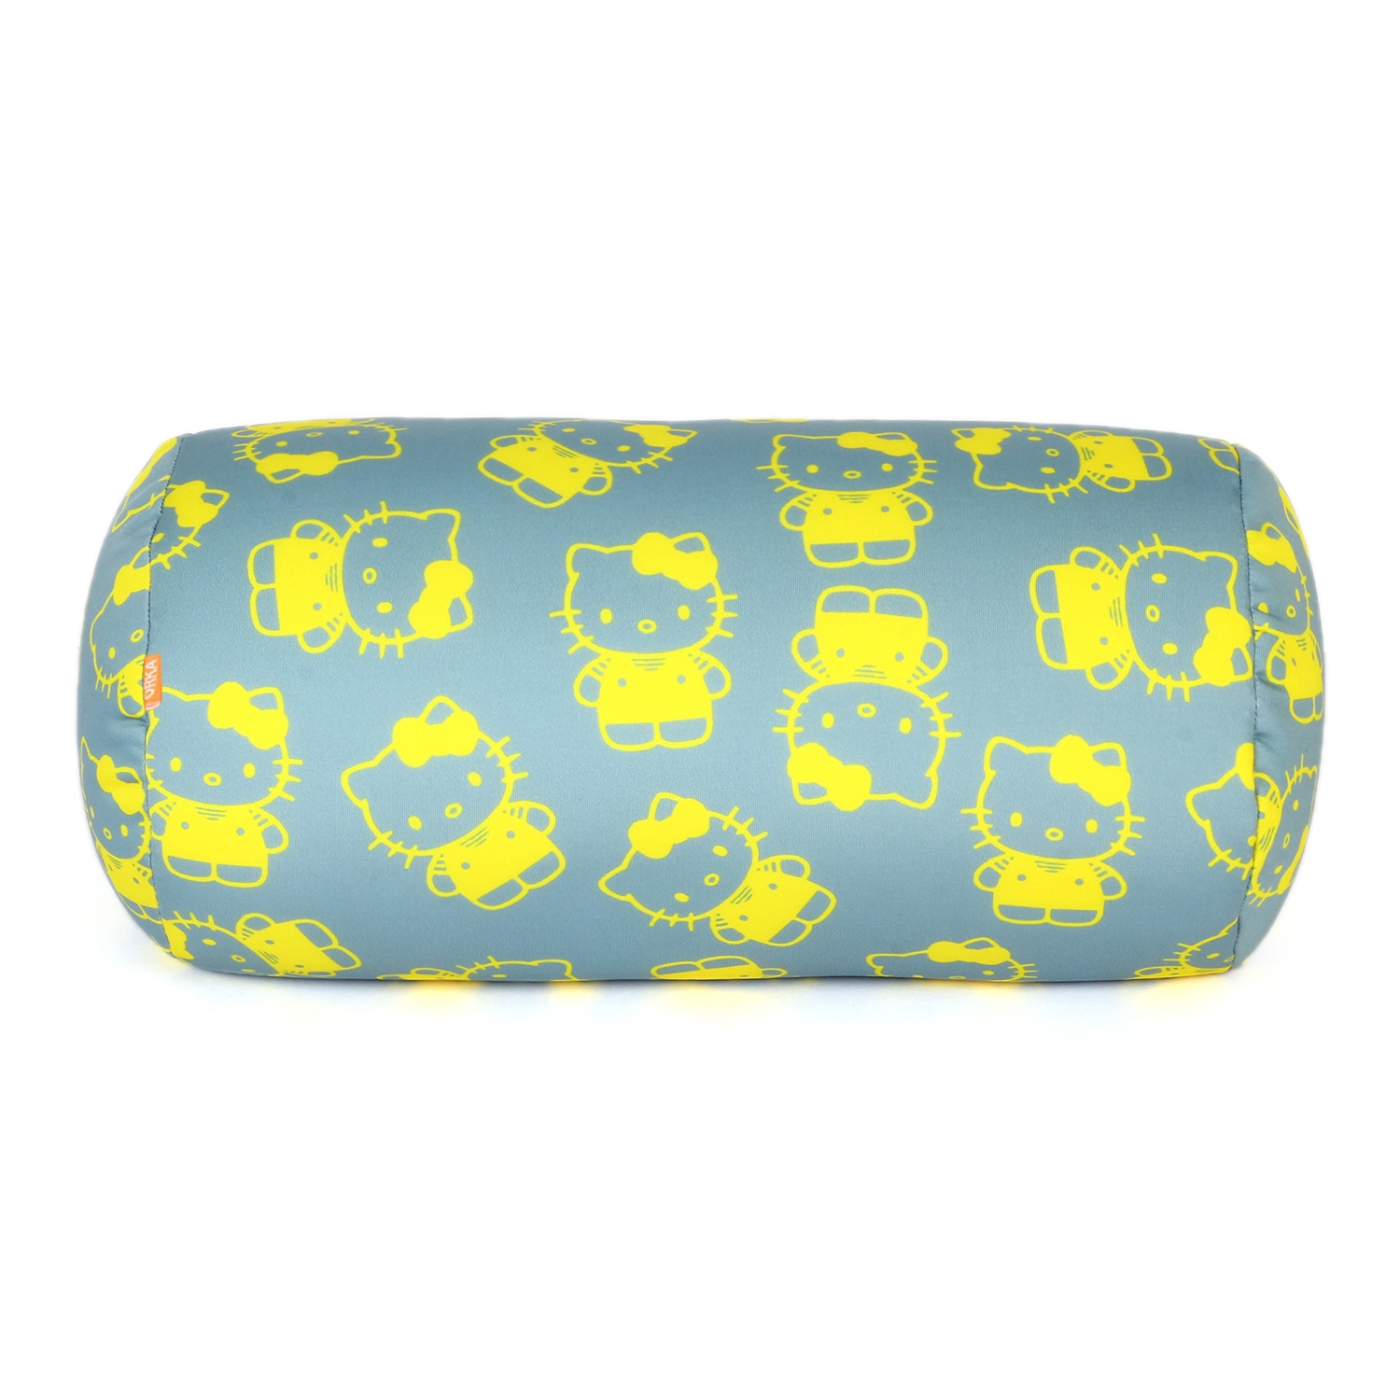 ORKA Digital Printed Microbeads Bolster Cushion - Grey, Yellow  